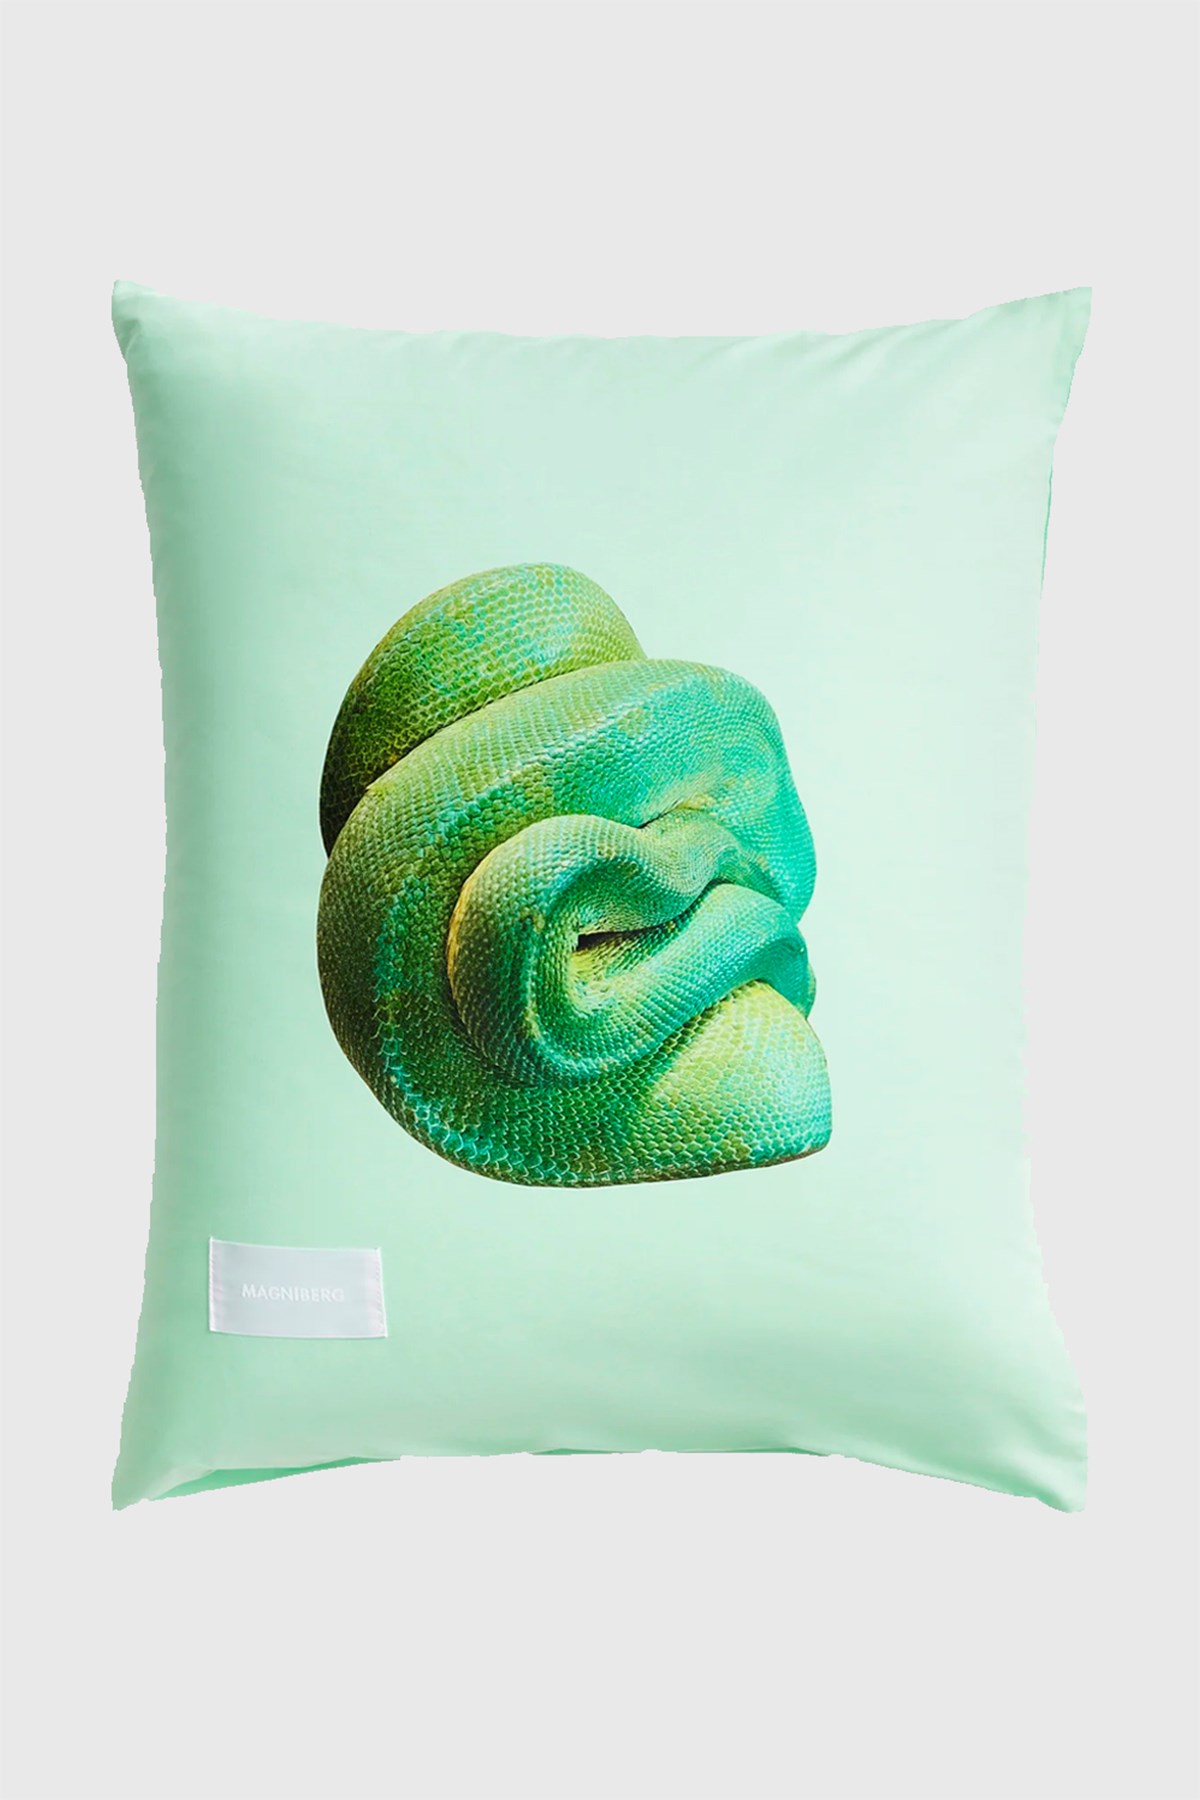 Magniberg Creates Pillows Based on Graphic Tee's